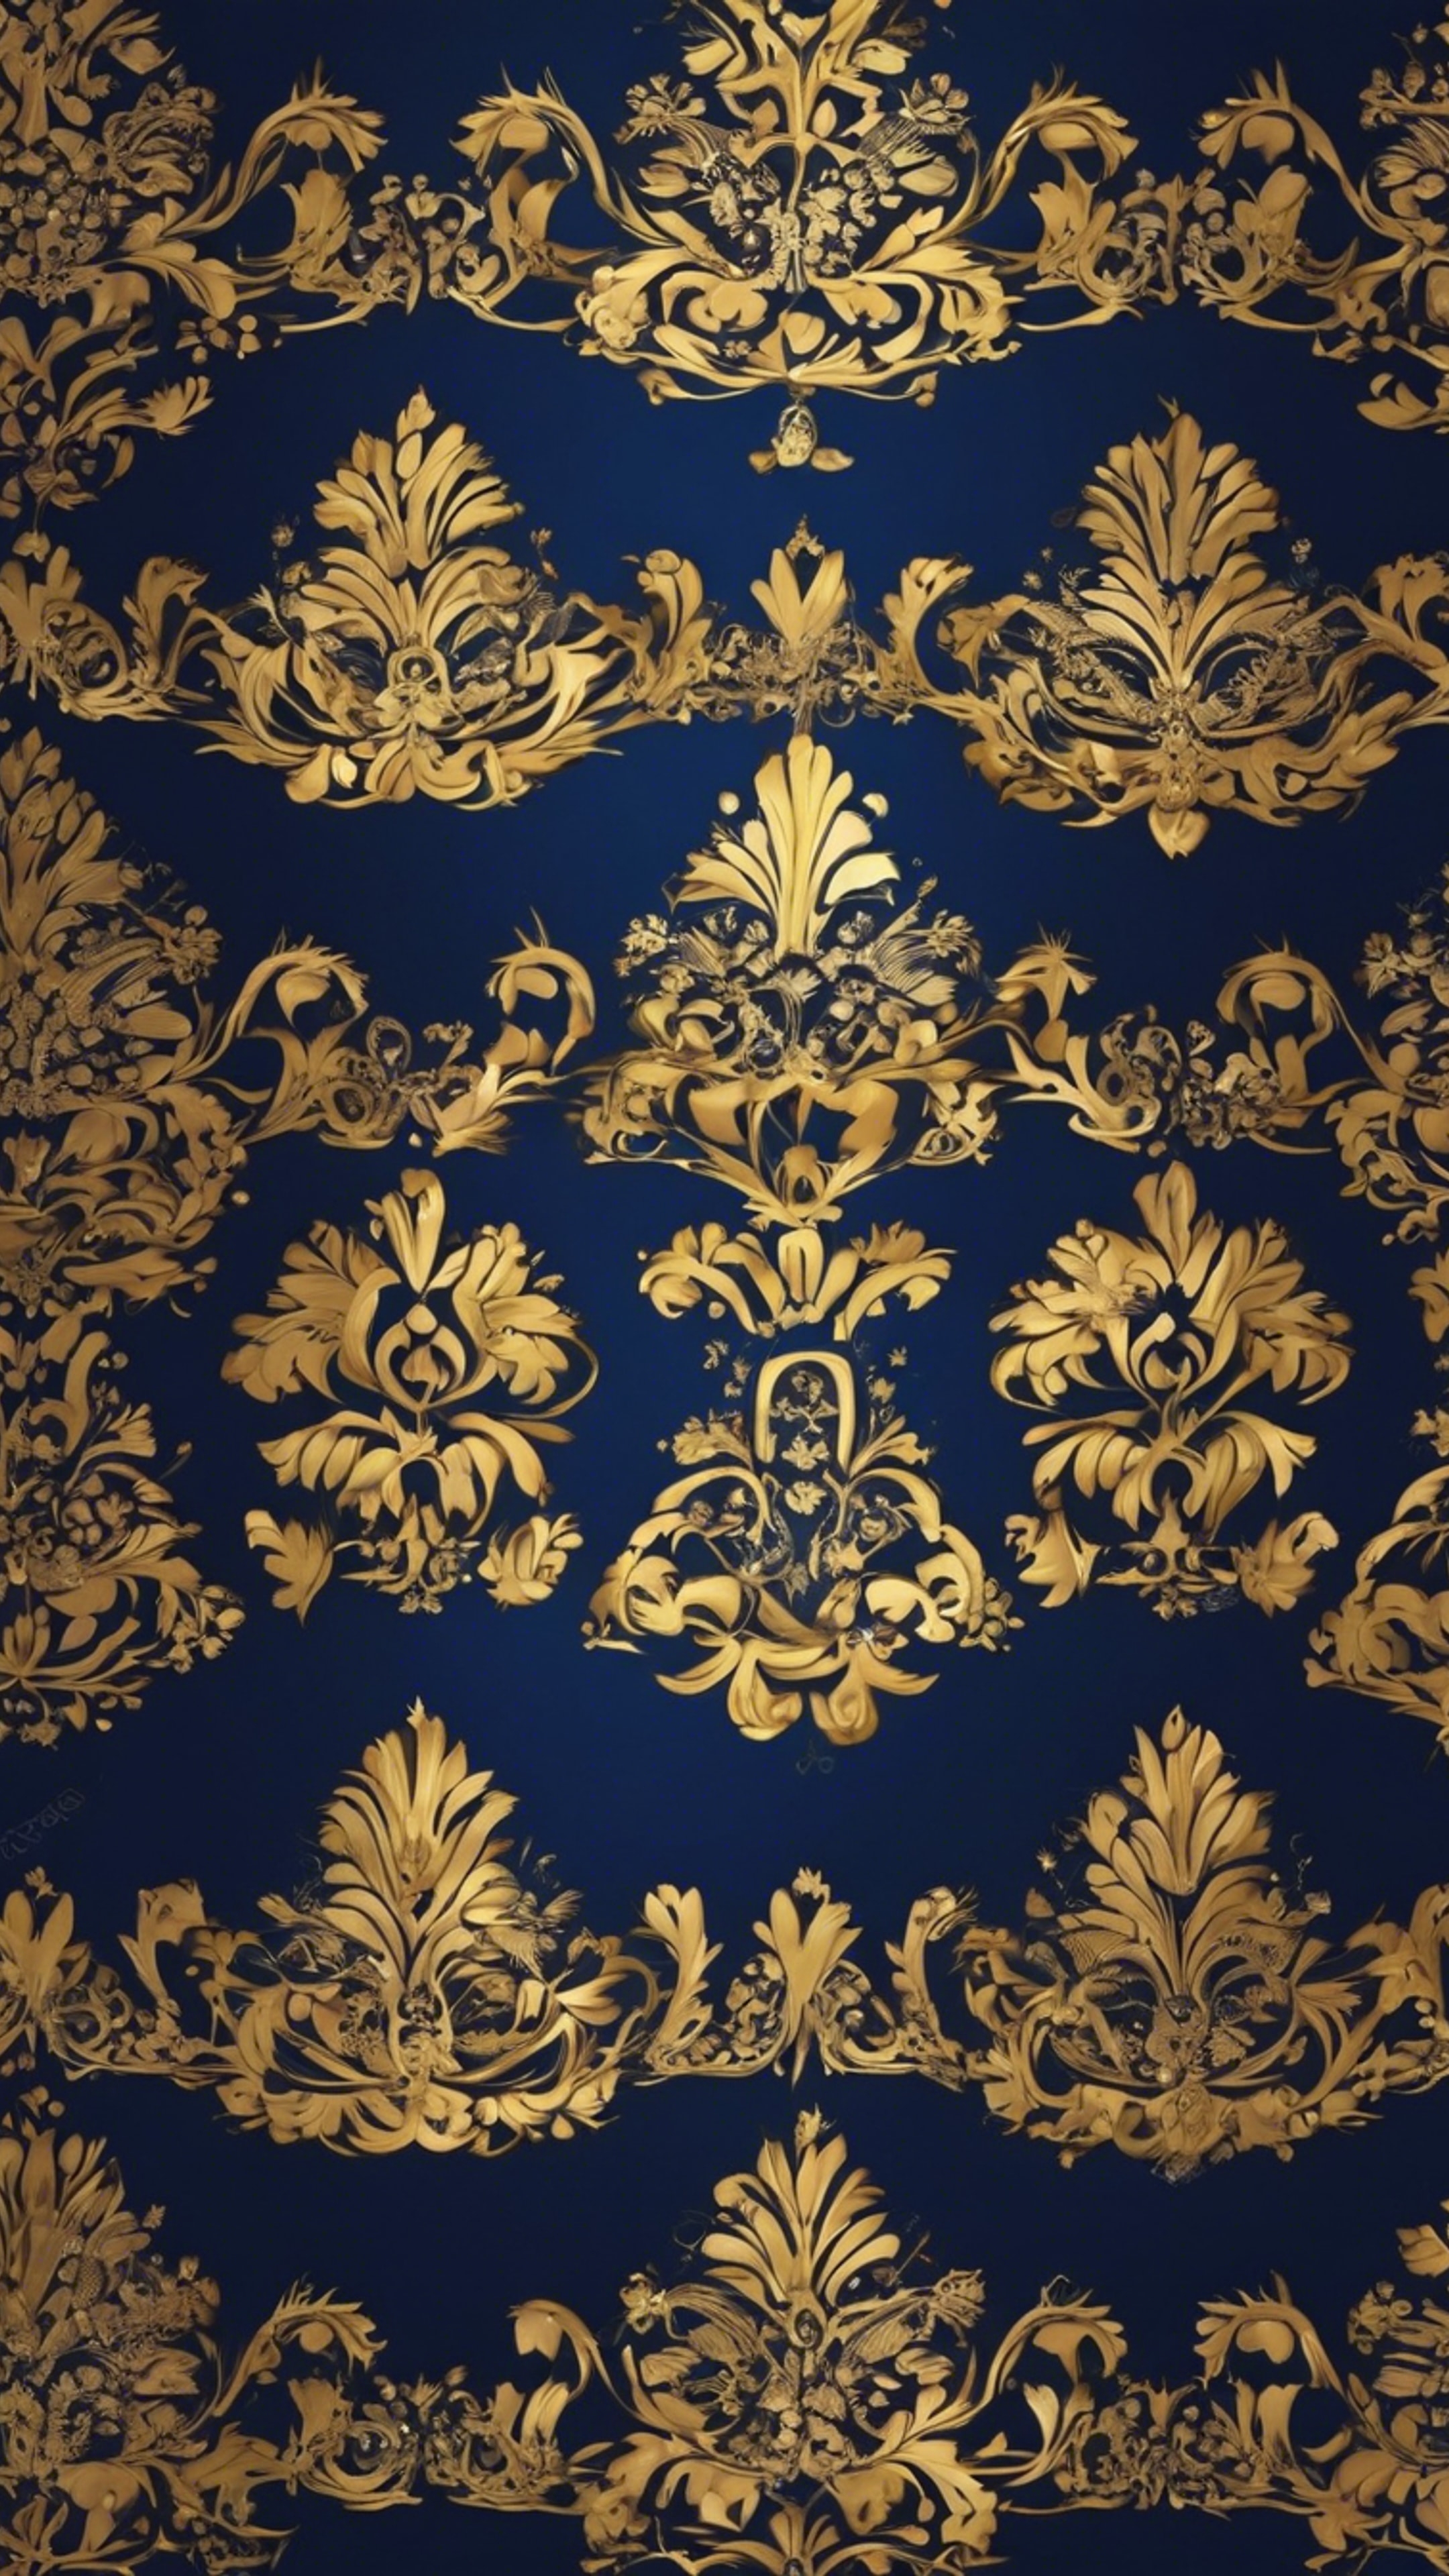 Royal golden damask on a midnight blue background壁紙[22484095d1454c8983f2]